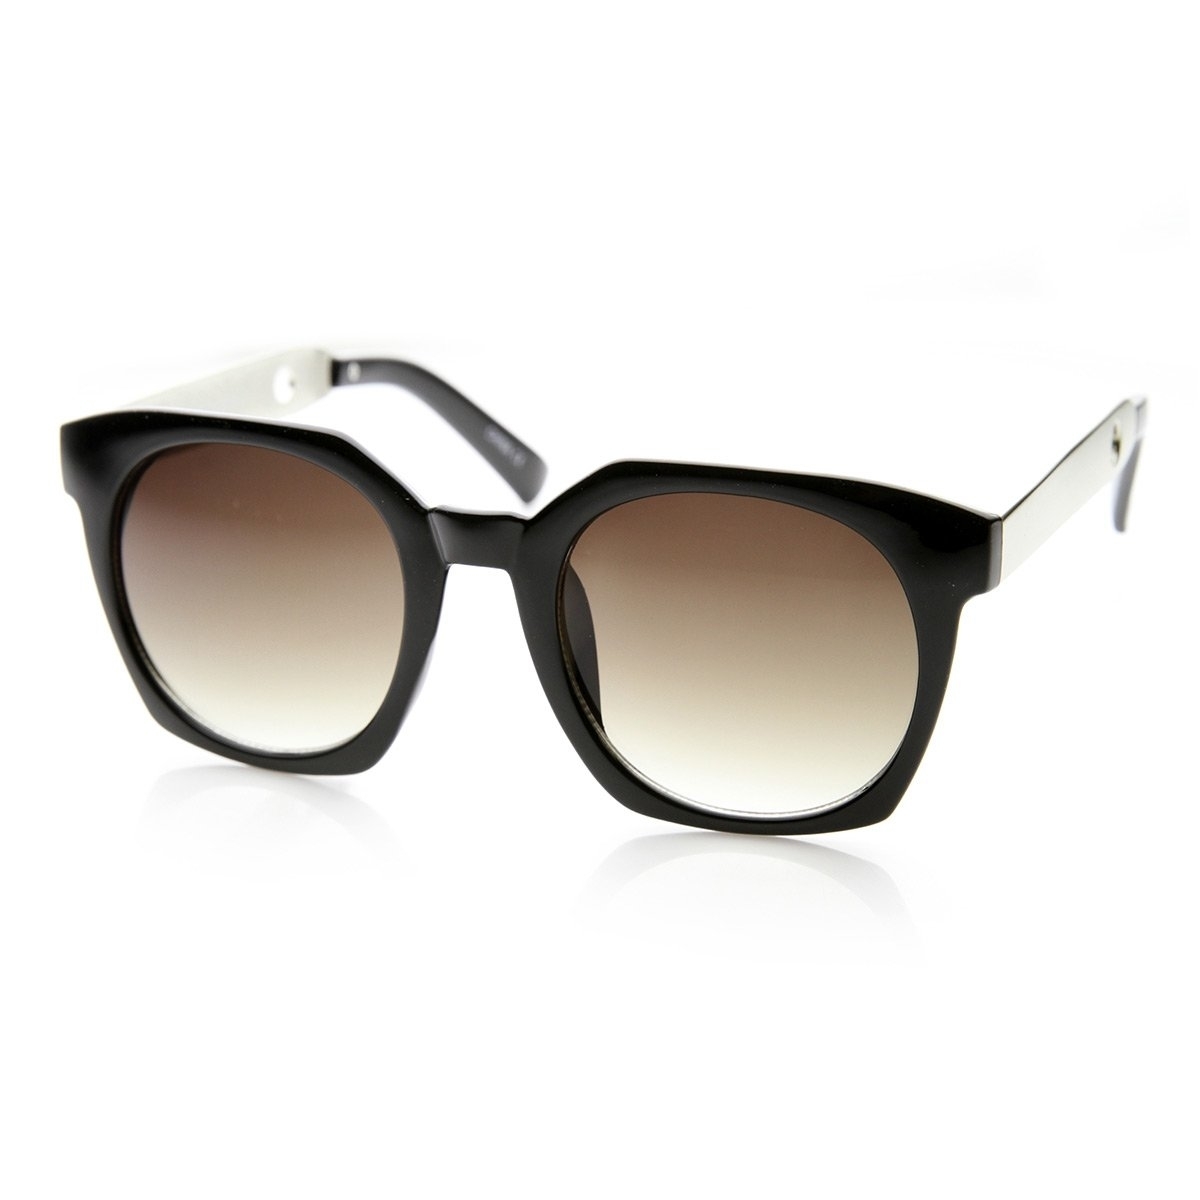 High Fashion Metal Temple Square Frame Womens Cat Eye Sunglasses - Matte-Black Green